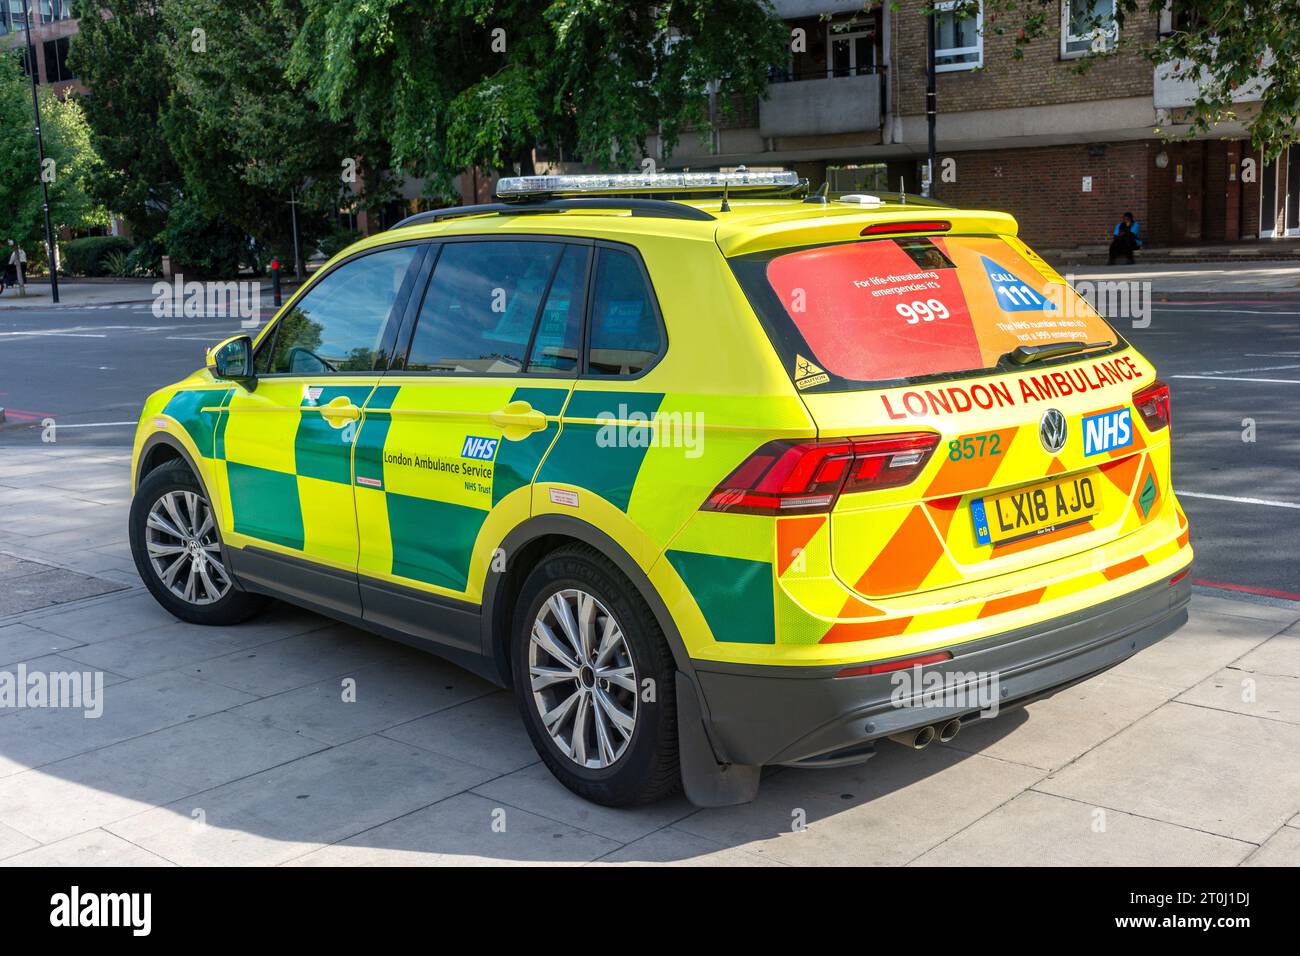 Ambulanza fuori dal pronto soccorso, St Thomas' NHS Hospital, Lambeth Palace Road, Borough of Lambeth, Greater London, Inghilterra, Regno Unito Foto Stock